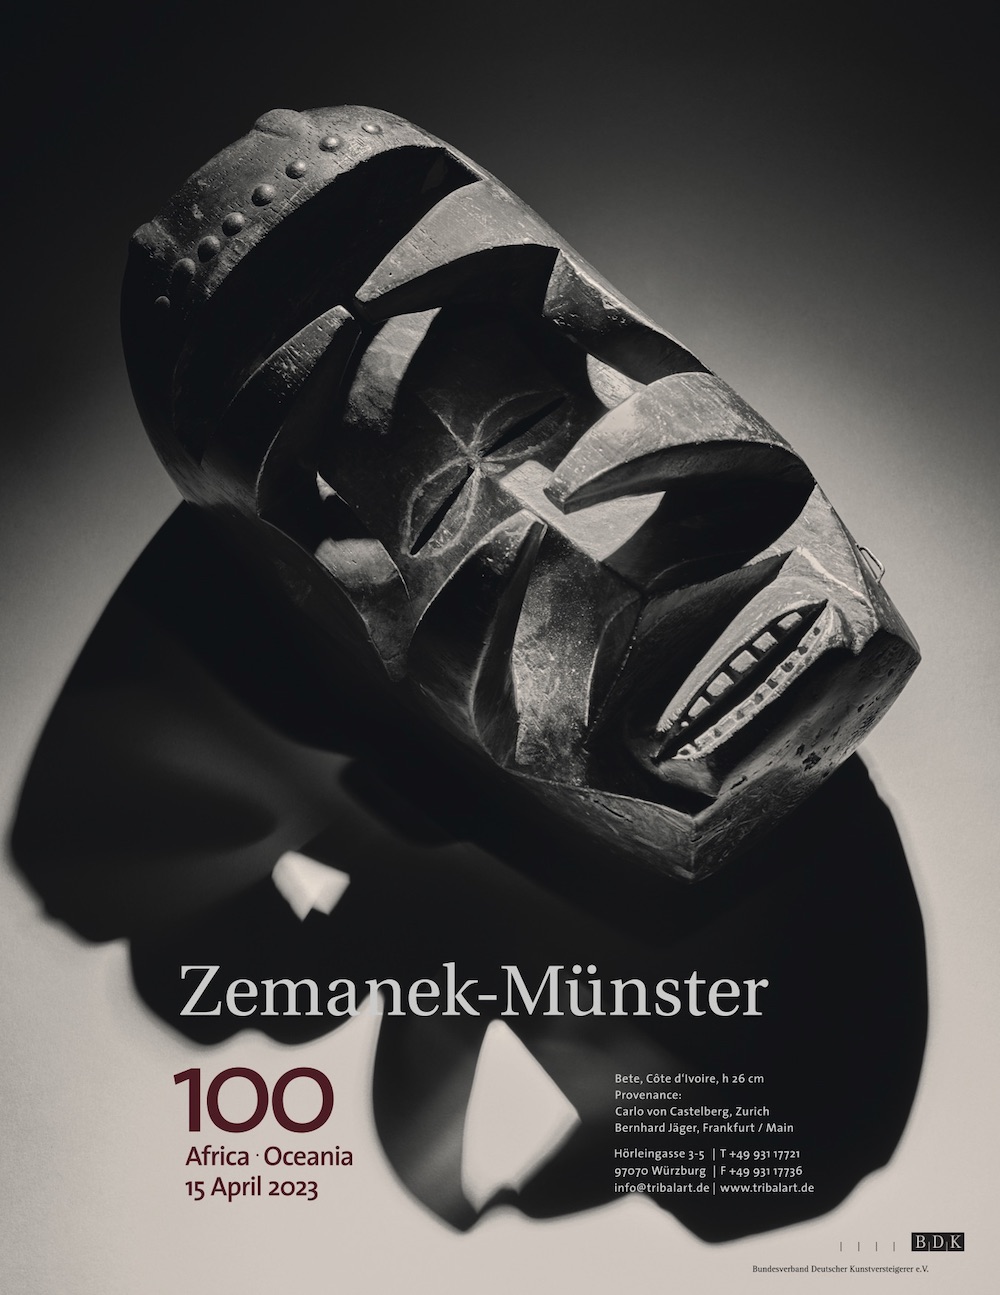 Zemanek Munster 100 auction